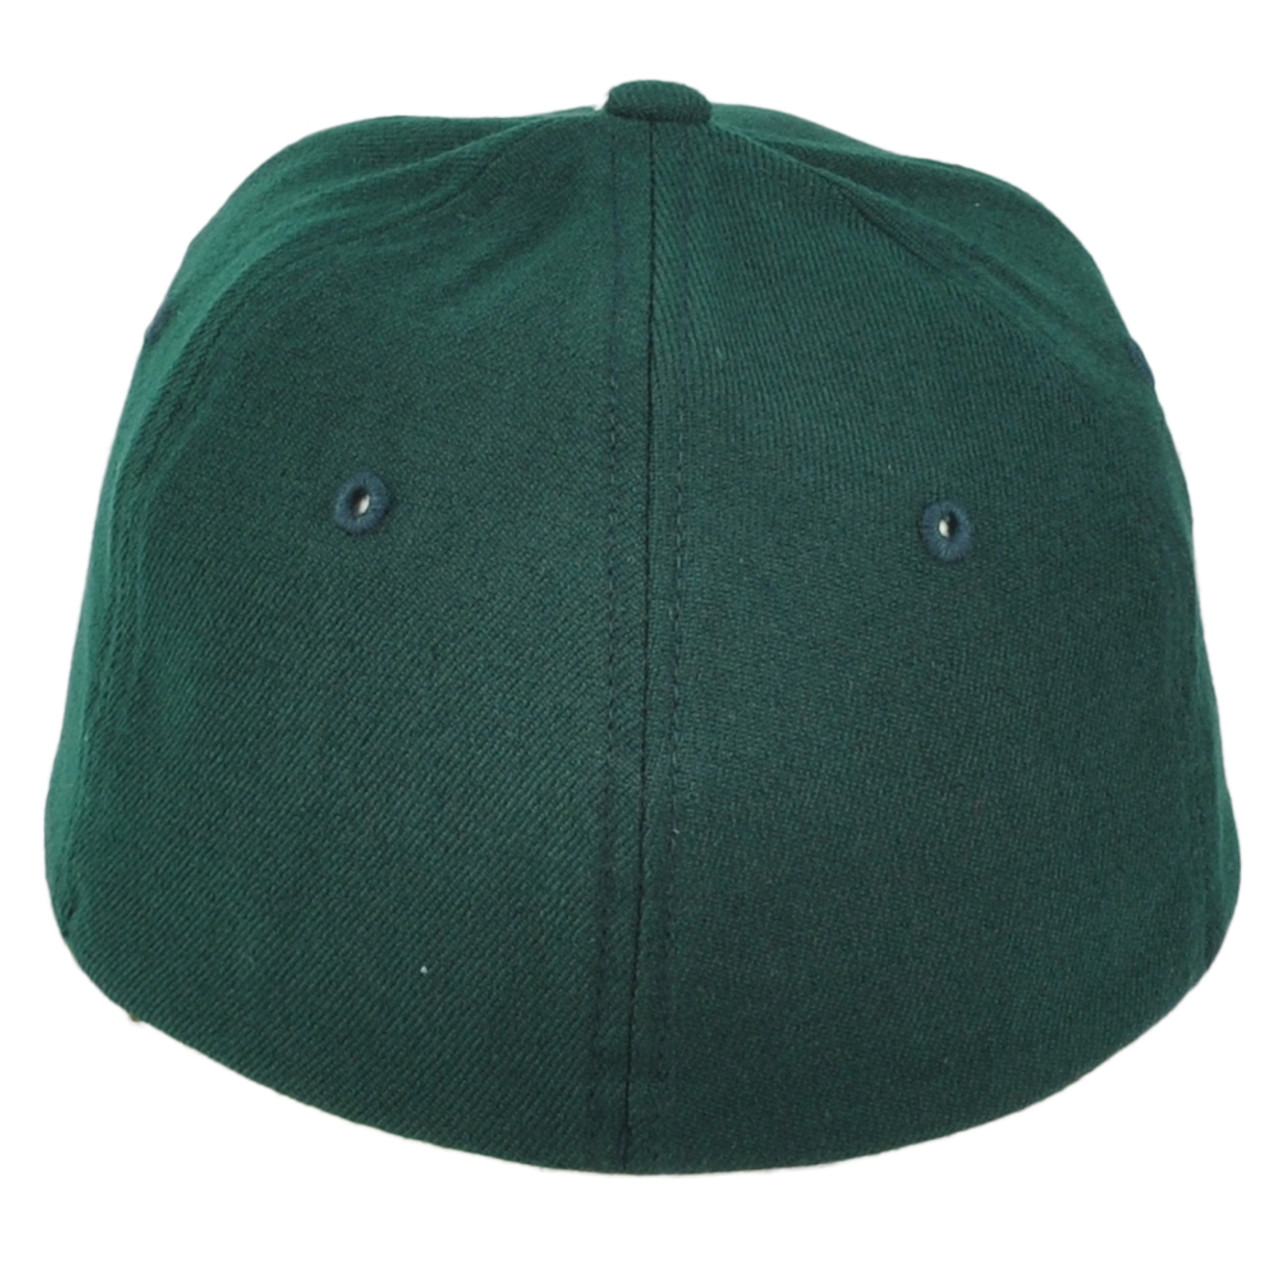 Zephyr Dark Cap Medium/Large Green Blank Forest Bill Flex Stretch Store Fit - Hat Cap Flat